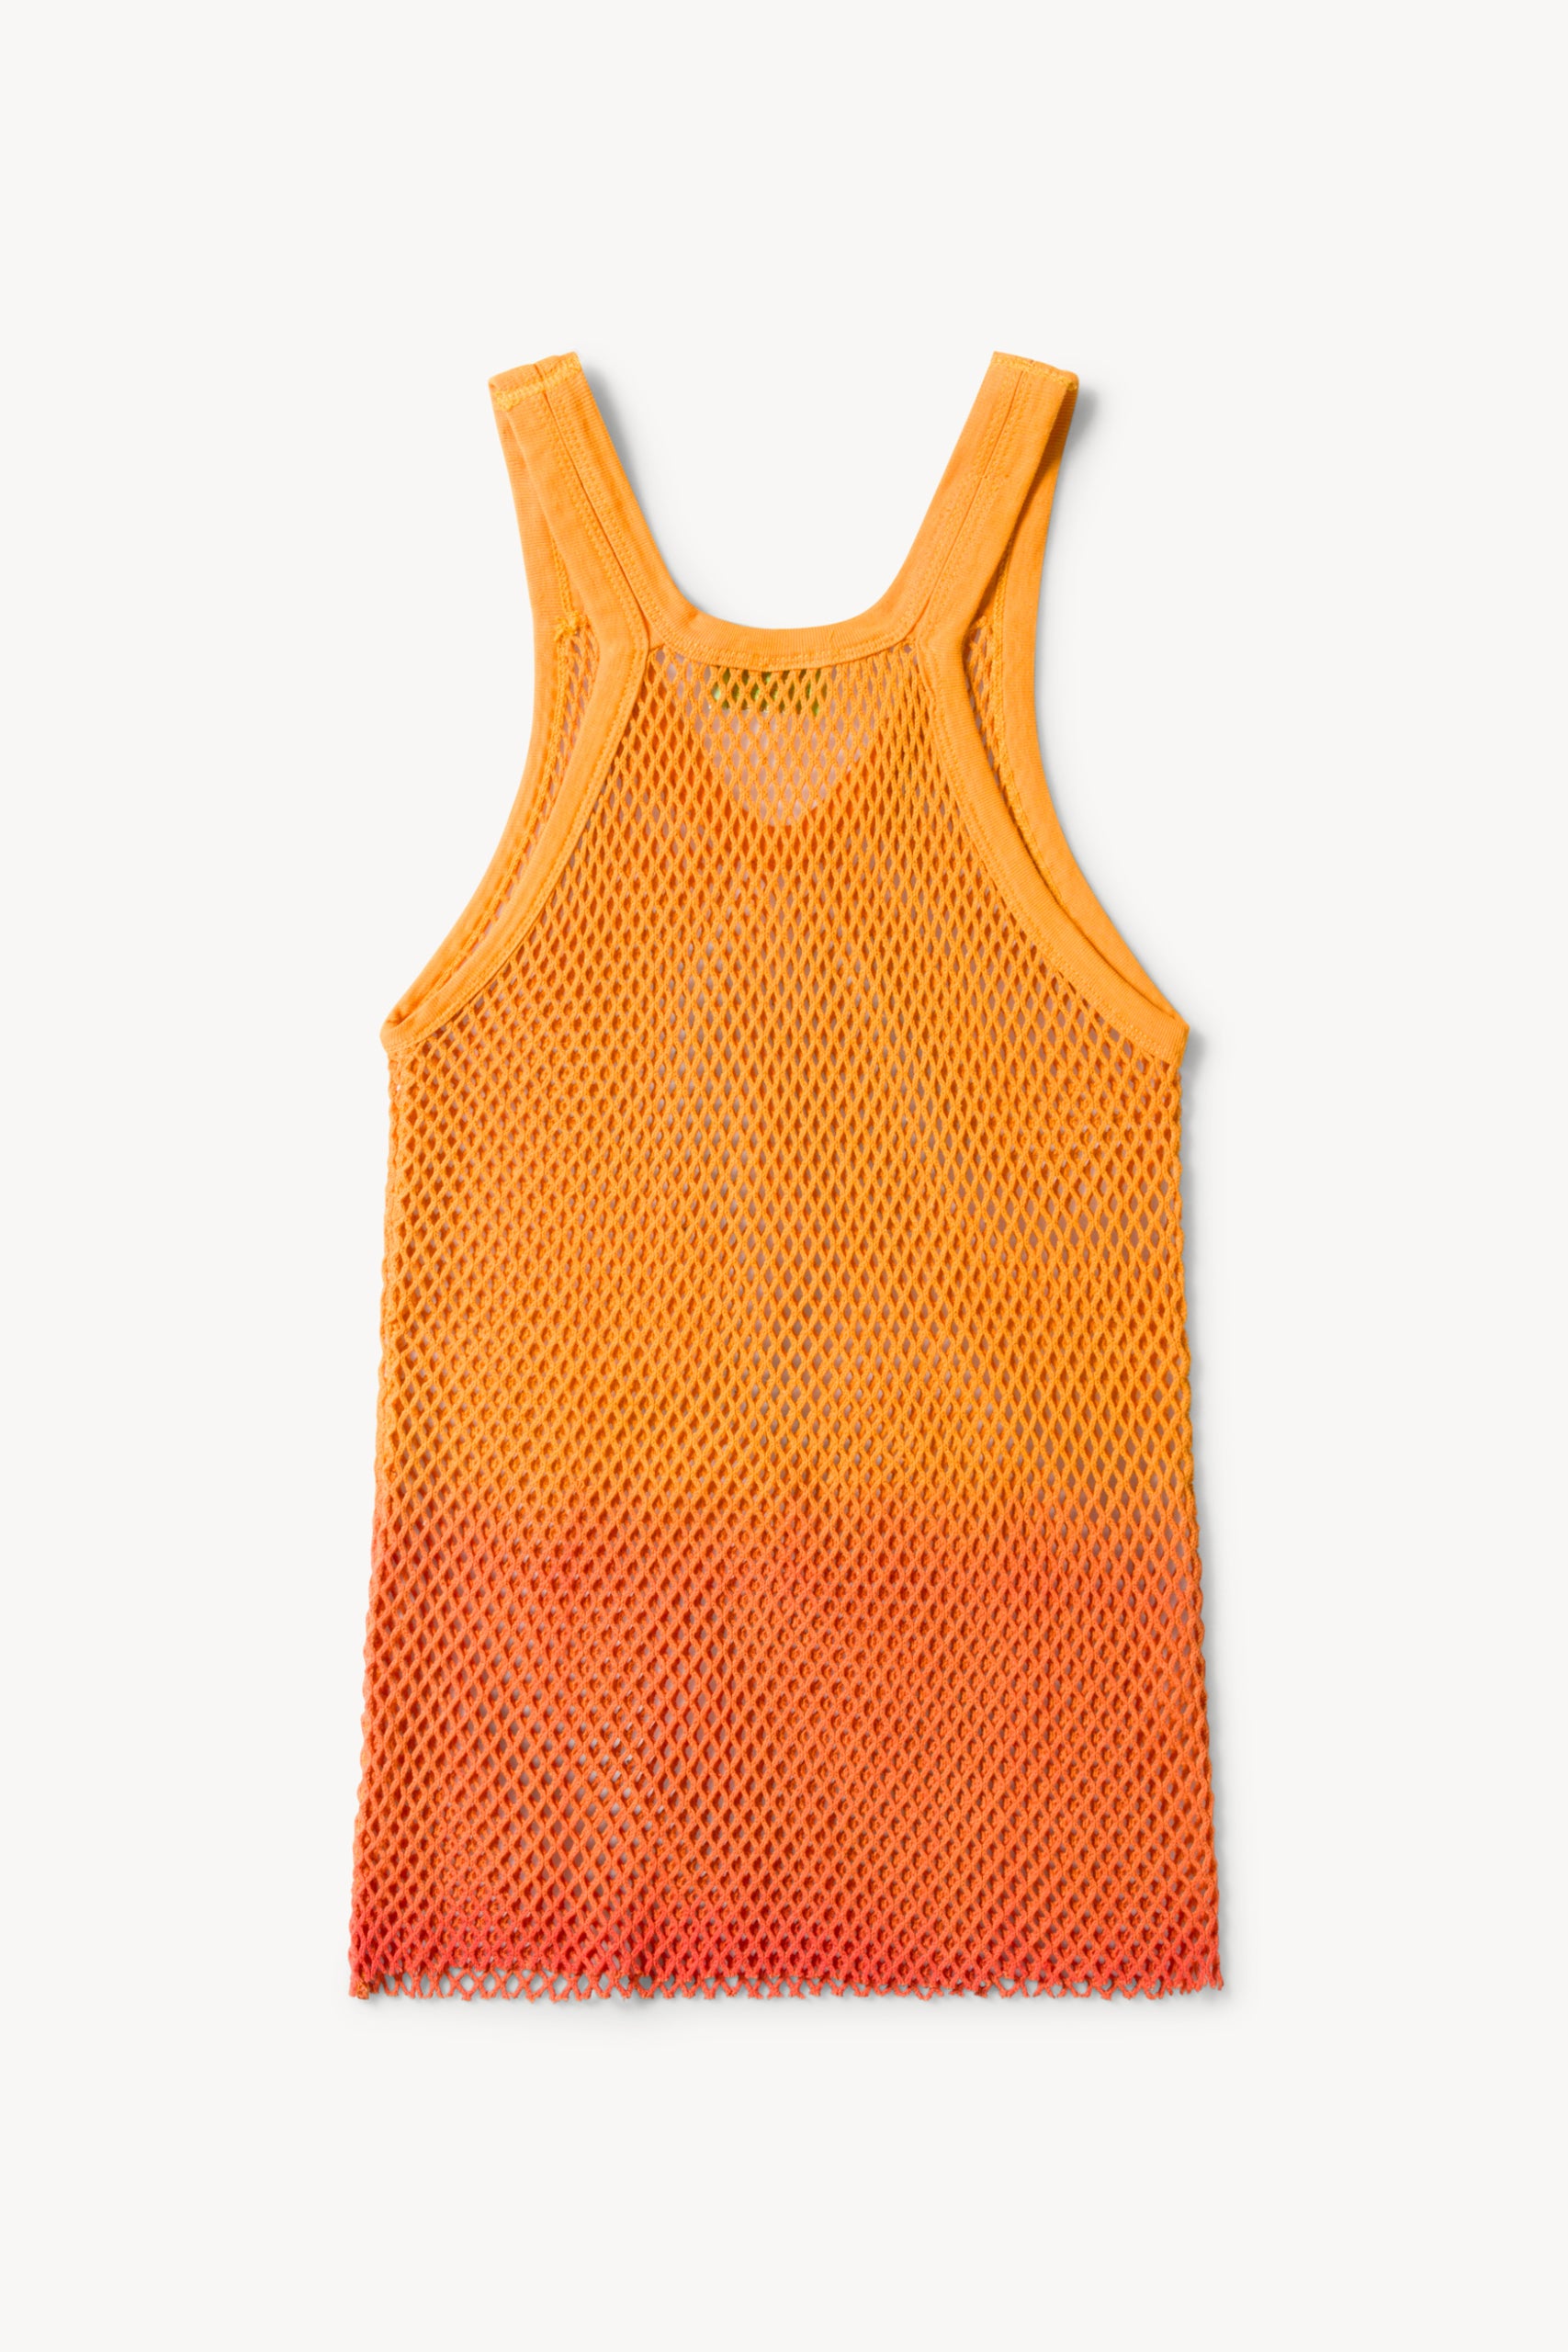 Load image into Gallery viewer, Aries x Malibu Dip Dye String Vest